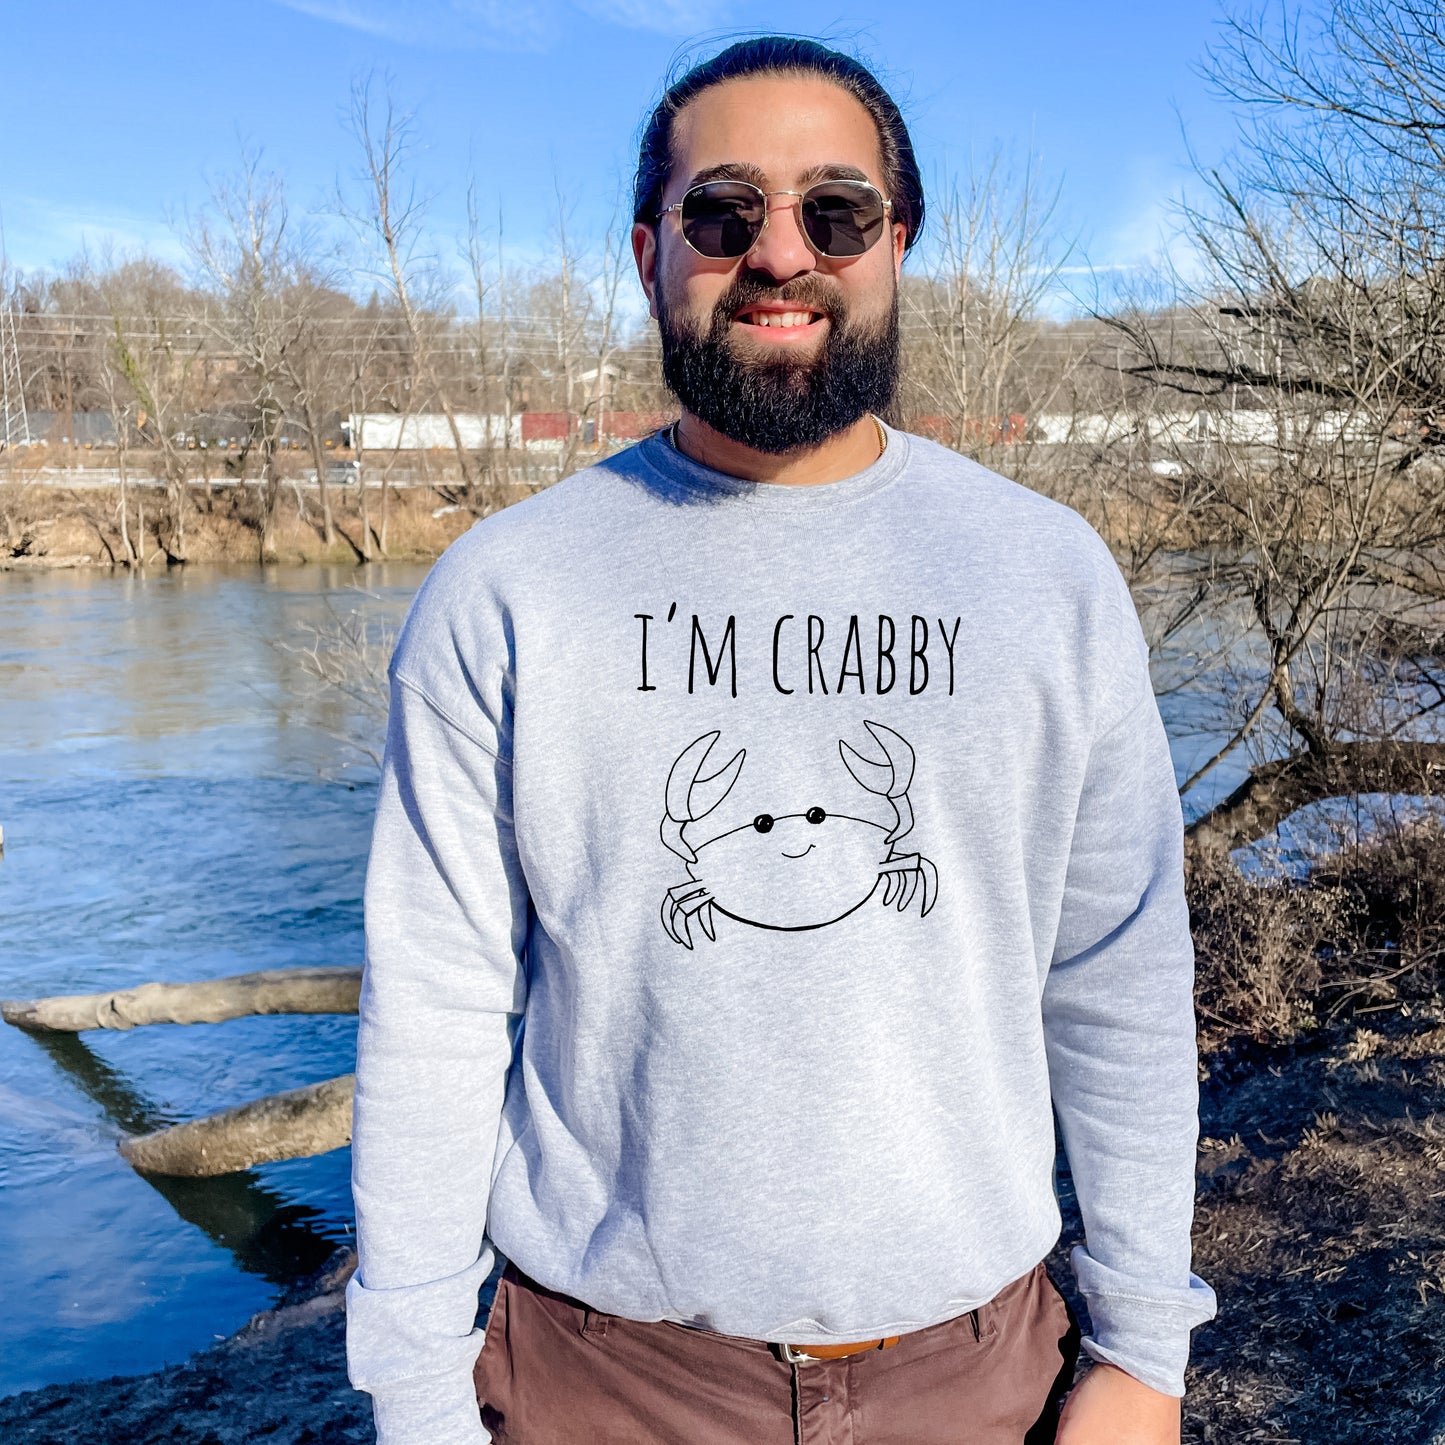 I'm Crabby - Unisex Sweatshirt - Heather Gray or Dusty Blue